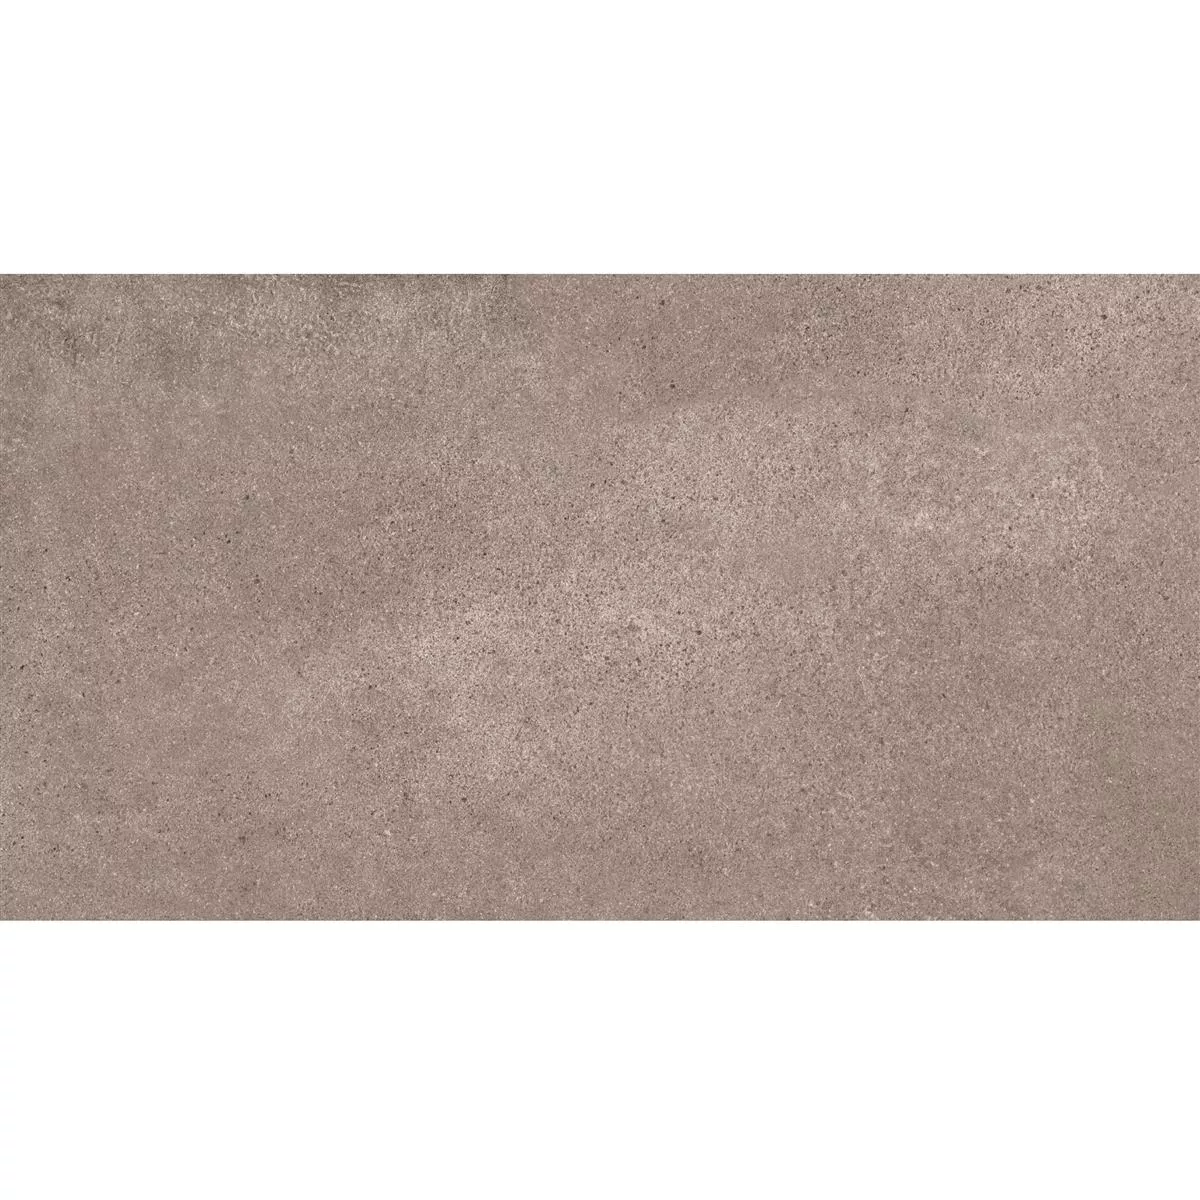 Sample Floor Tiles Stone Optic Riad Mat R9 Brown 30x60cm 